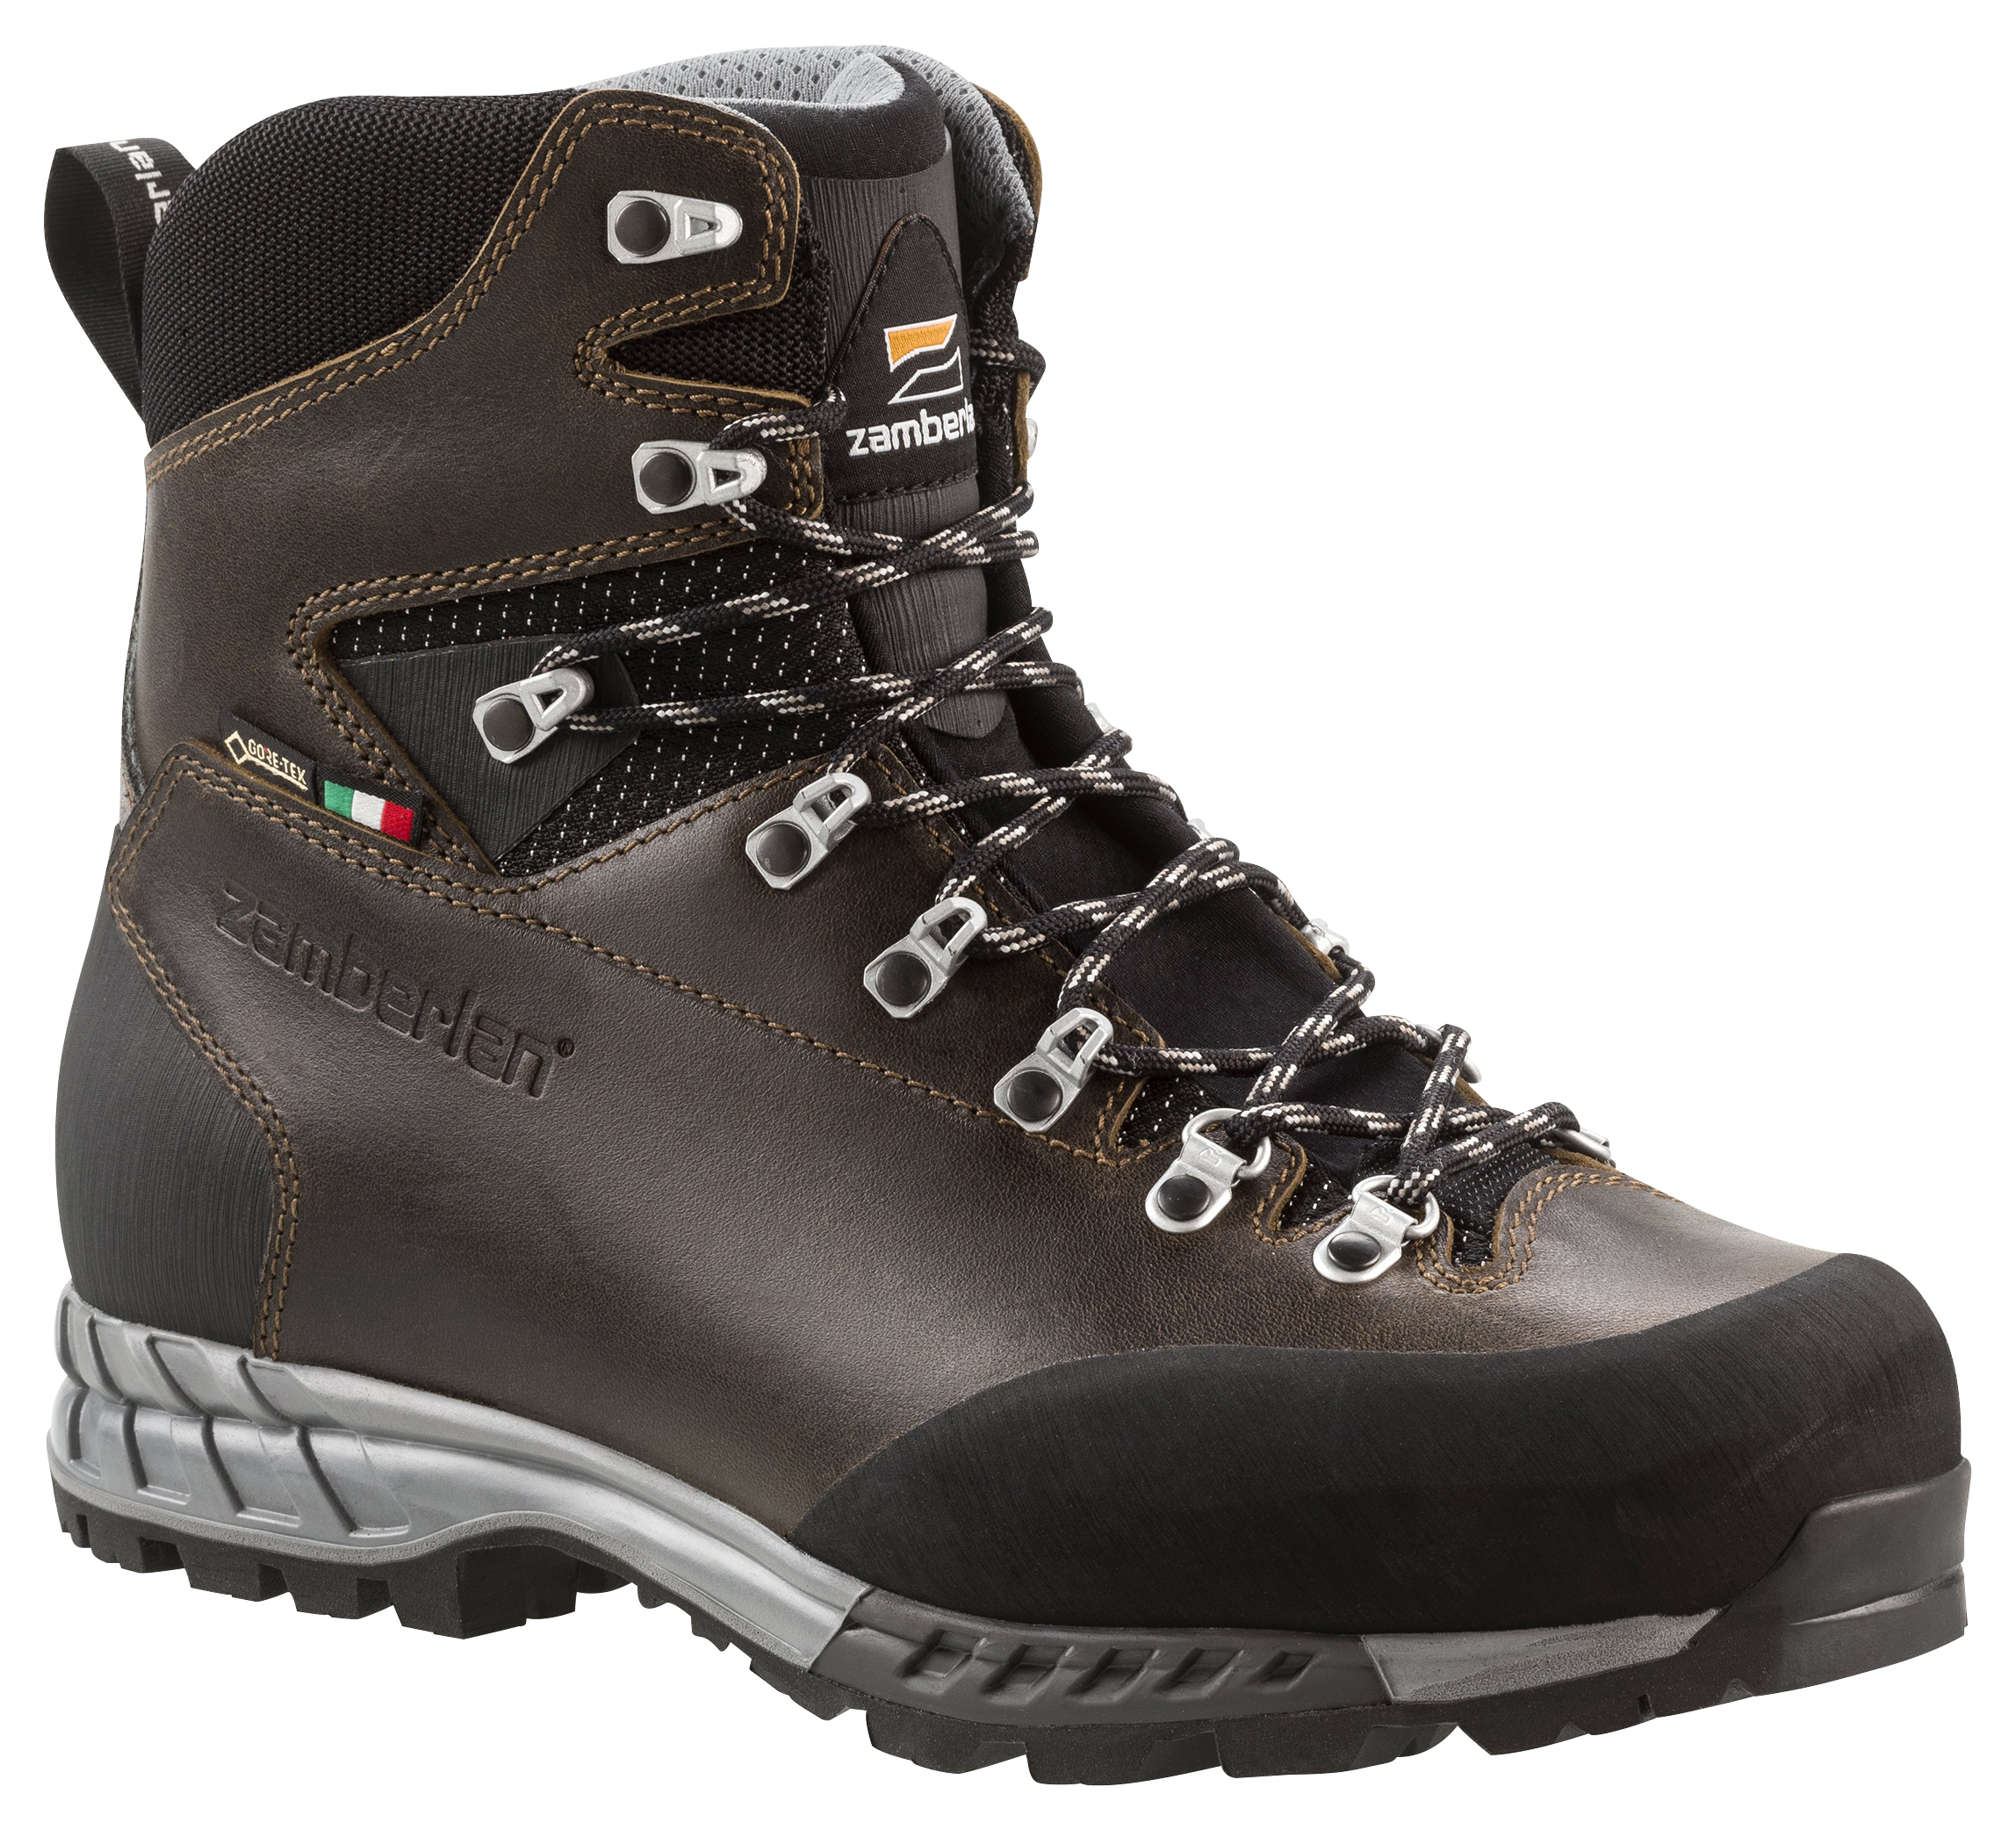 Zamberlan 1111 Cresta GTX   RR Waterproof Hiking Boots for Men - Waxed Dark Brown - 10 5M